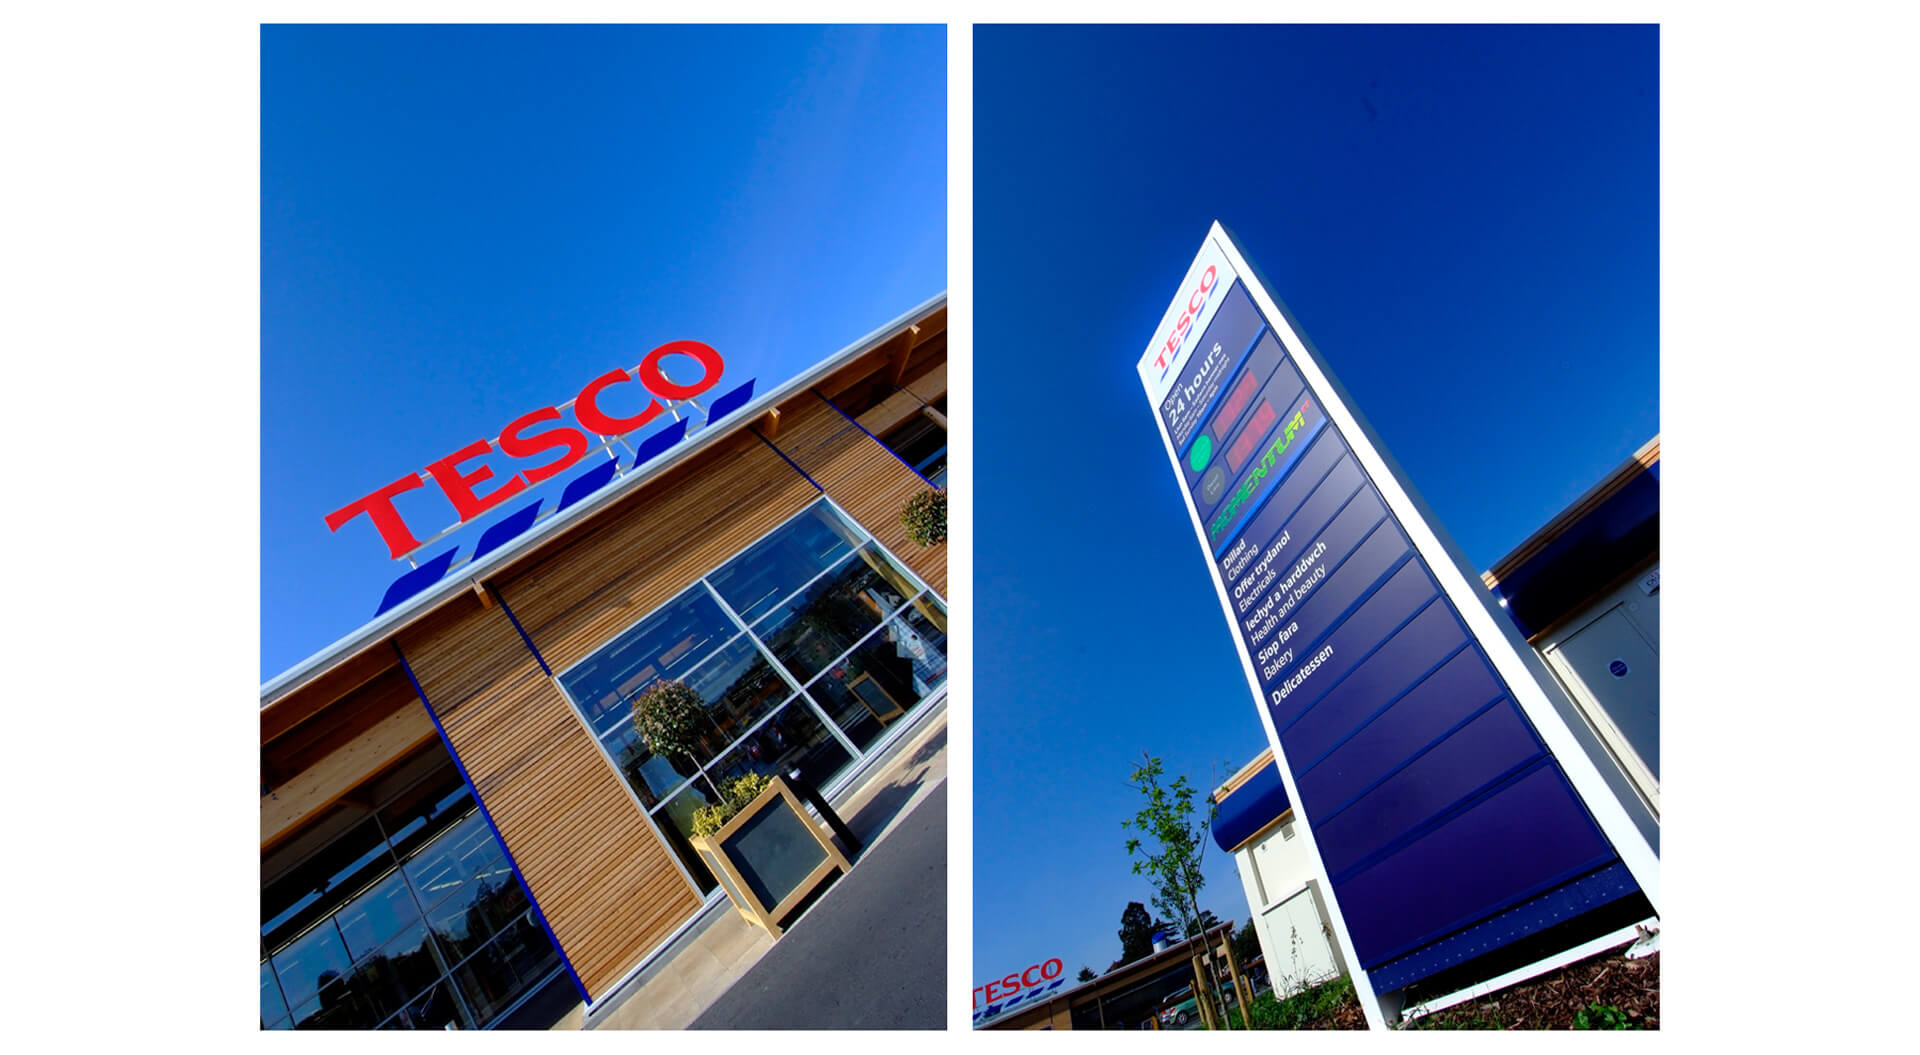 Tesco supermarket welshpool store exterior signage and branding